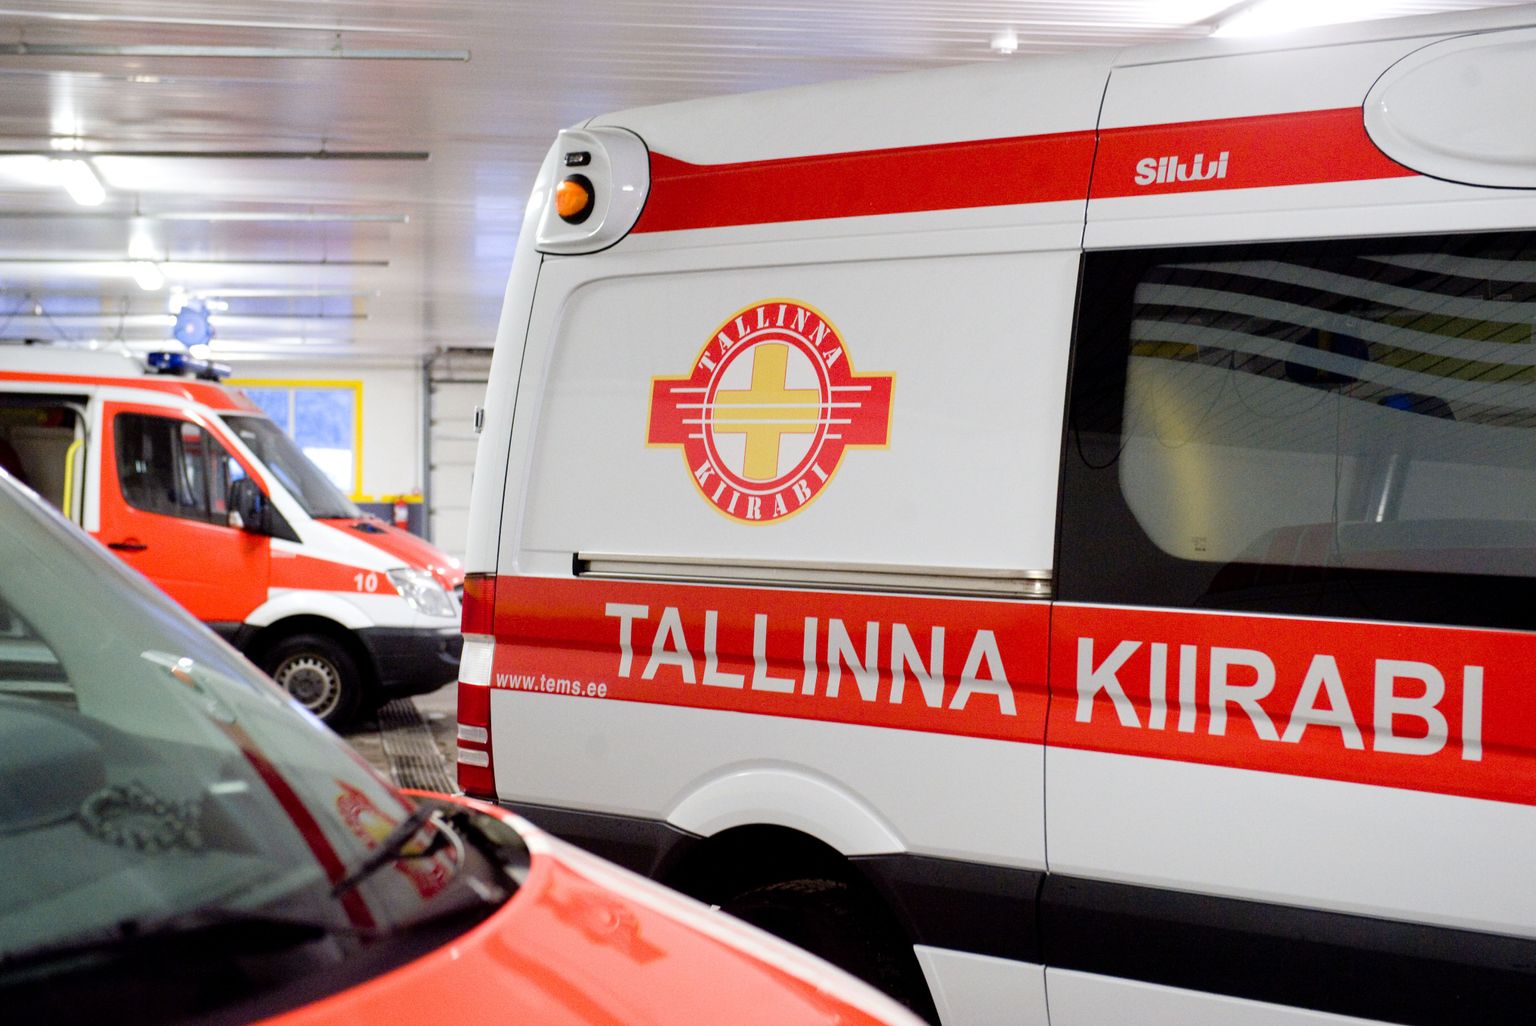 Tallinna kiirabi uus logo kiirabiautodel.